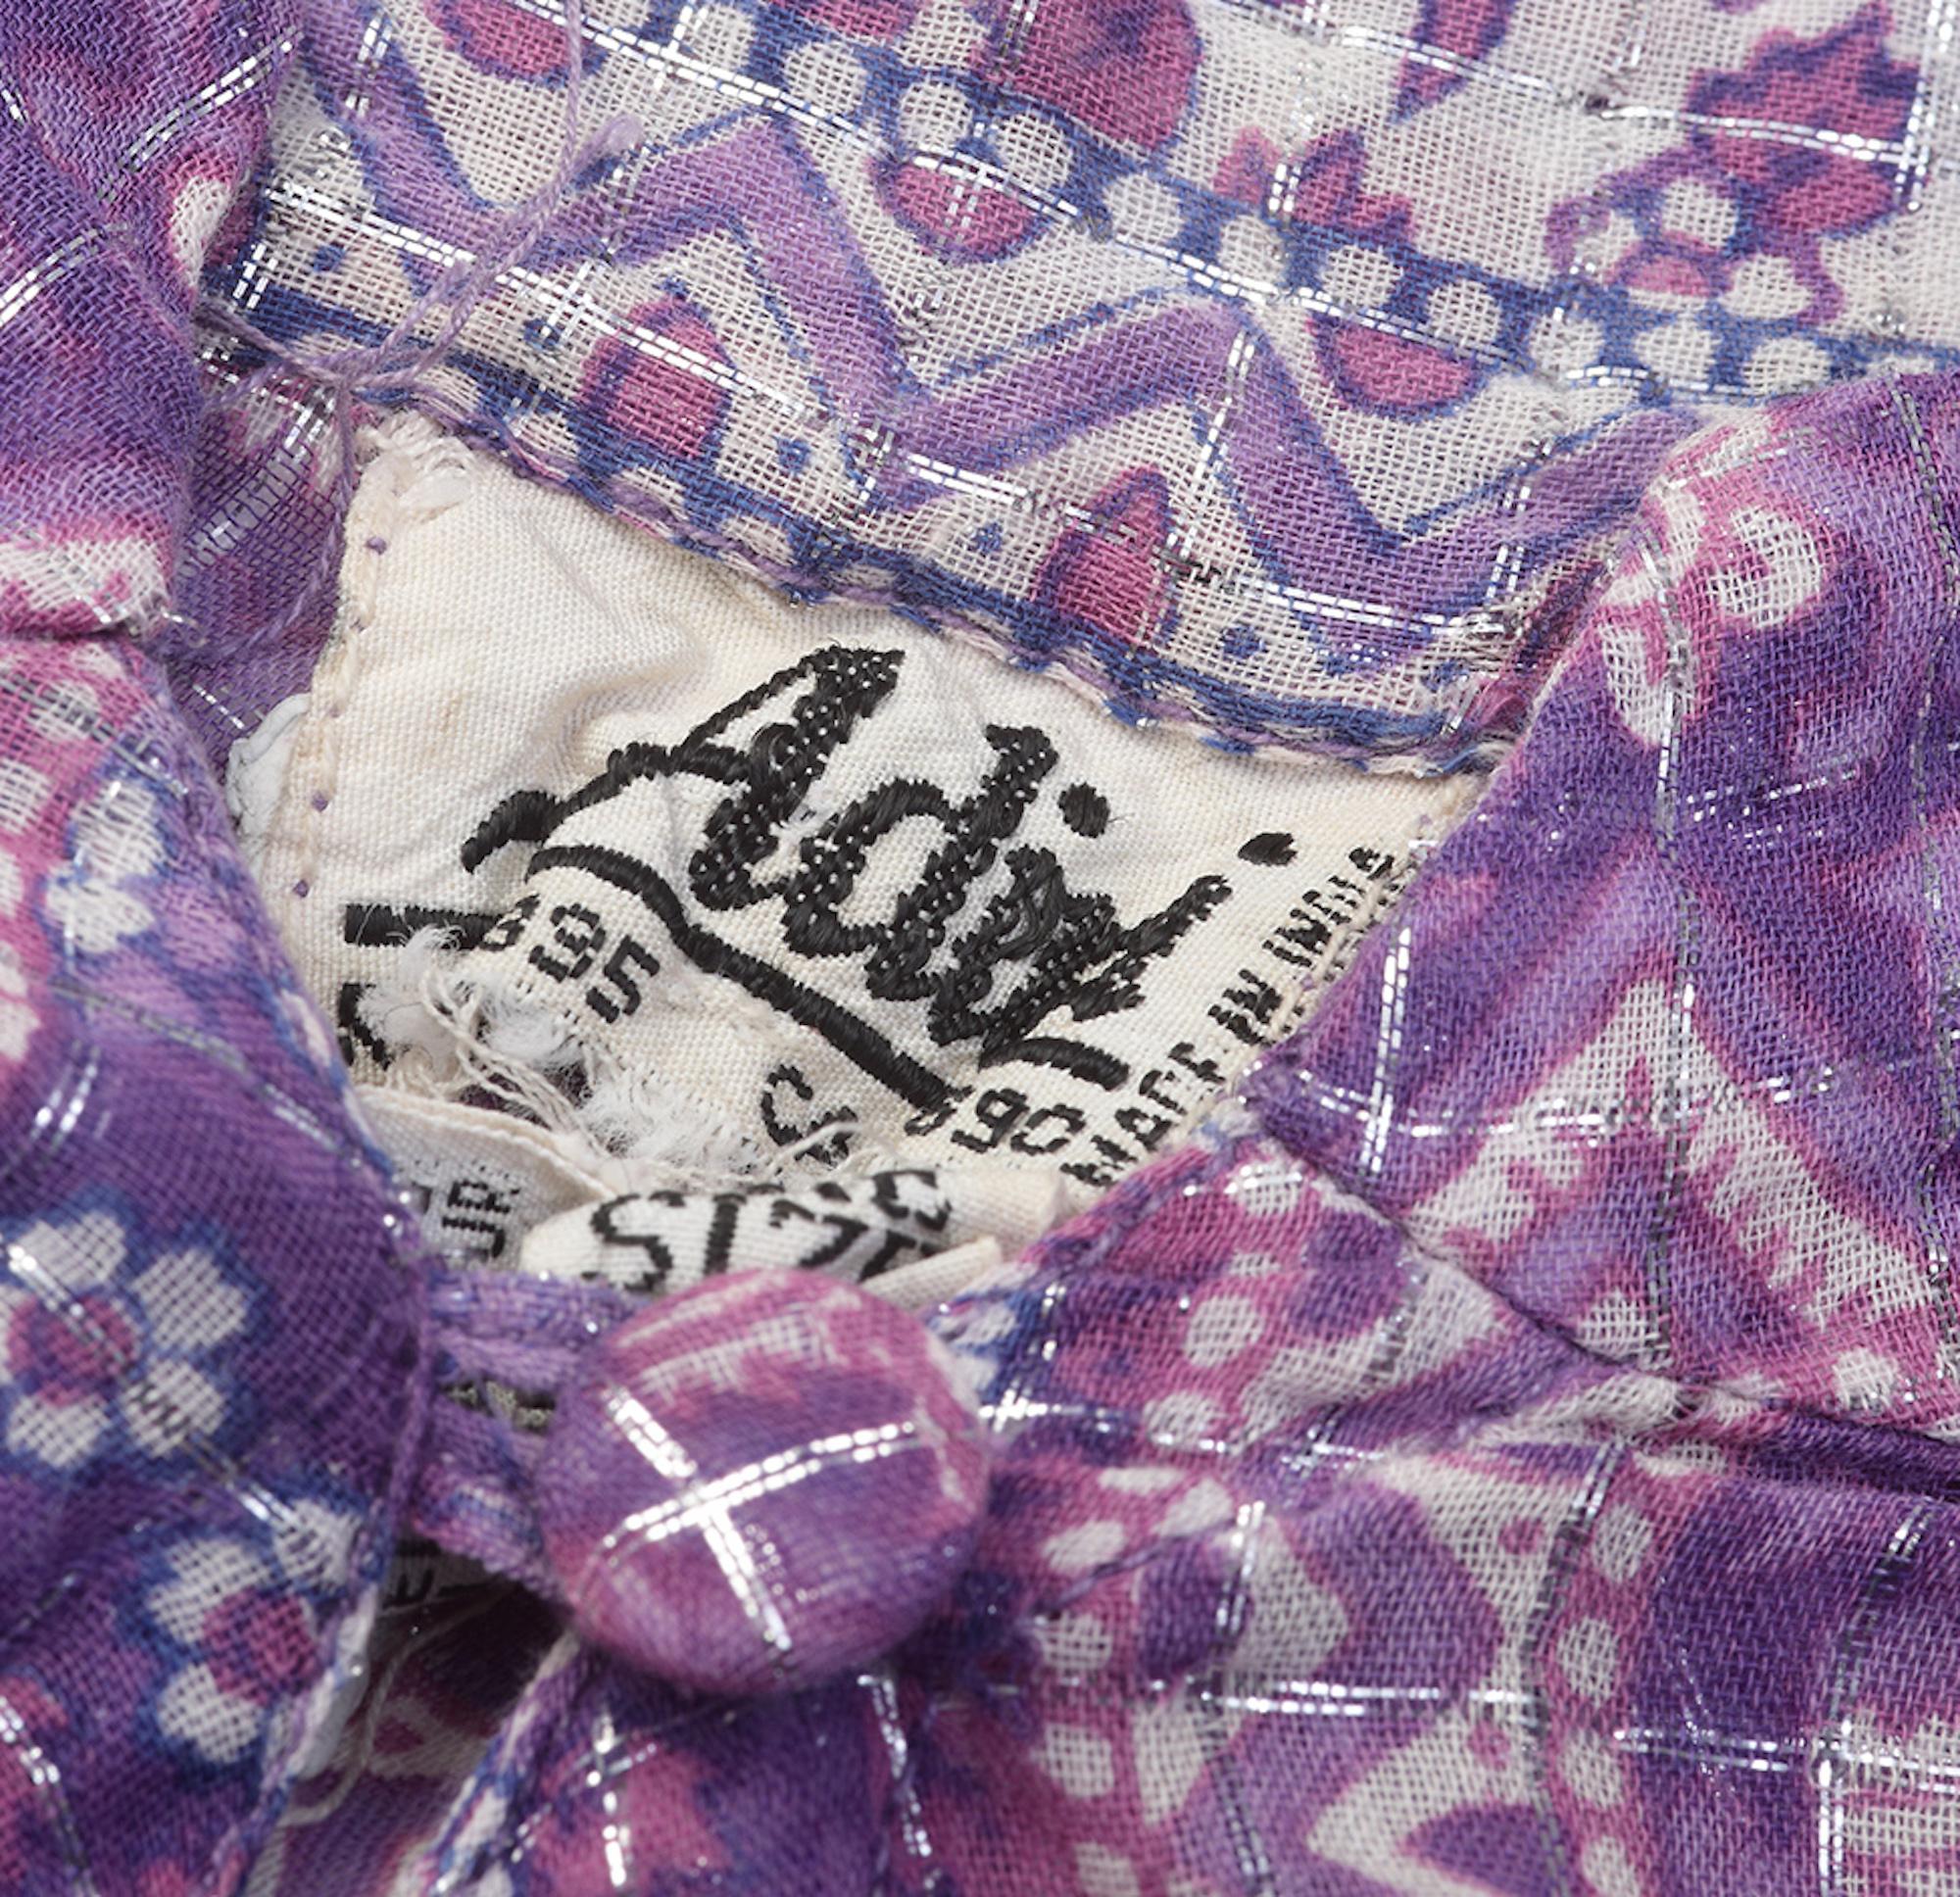 1978 Rare Purple Adini Sultana Dress With Angel Sleeves and Metallic Thread 1